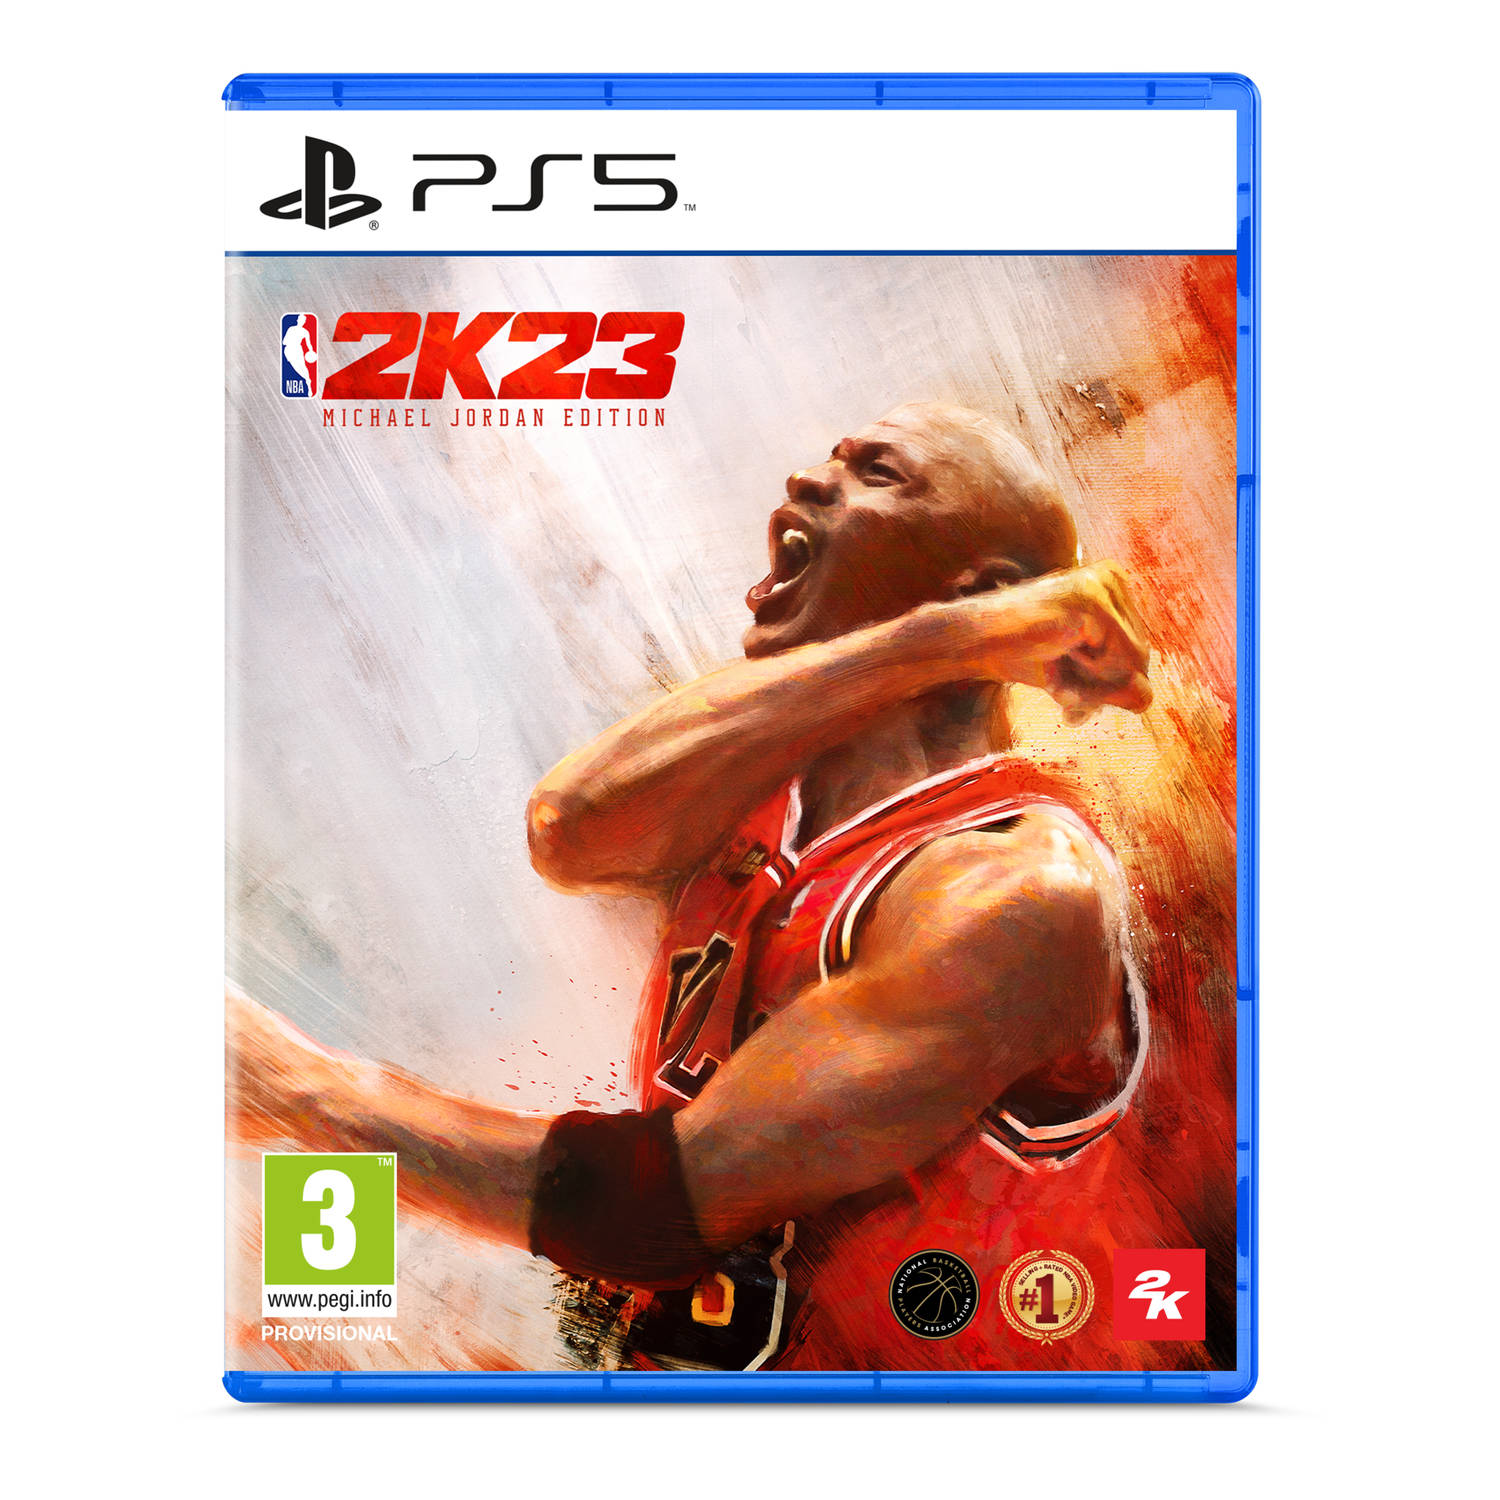 NBA 2K23 - Michael Jordan Edition - PS5